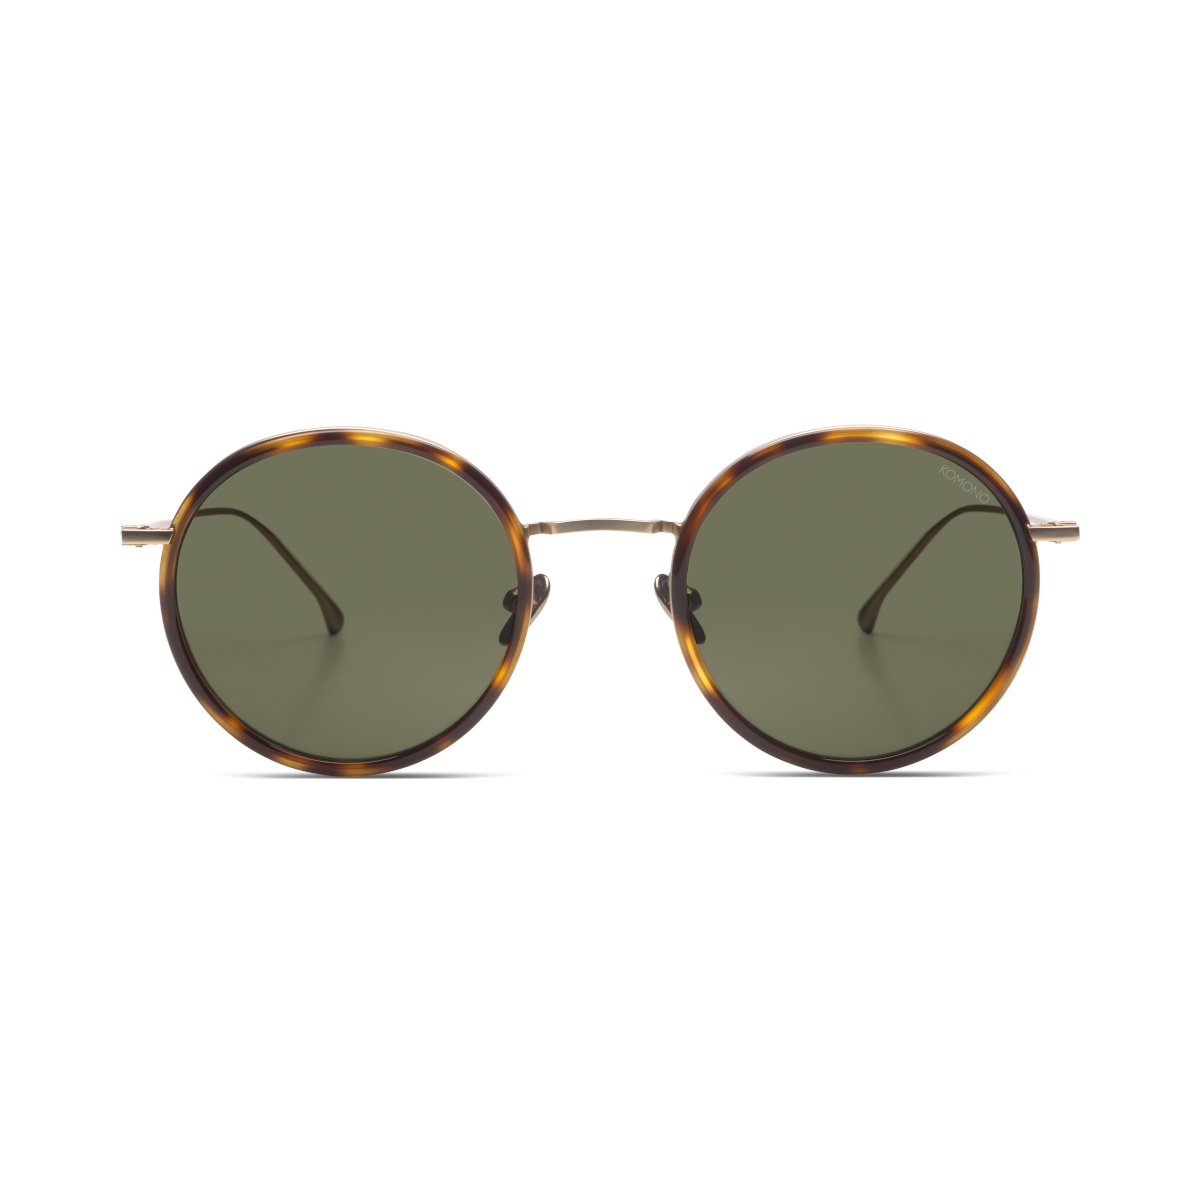 Komono Sunglasses - Στρογγυλά γυαλιά ηλίου - White Gold